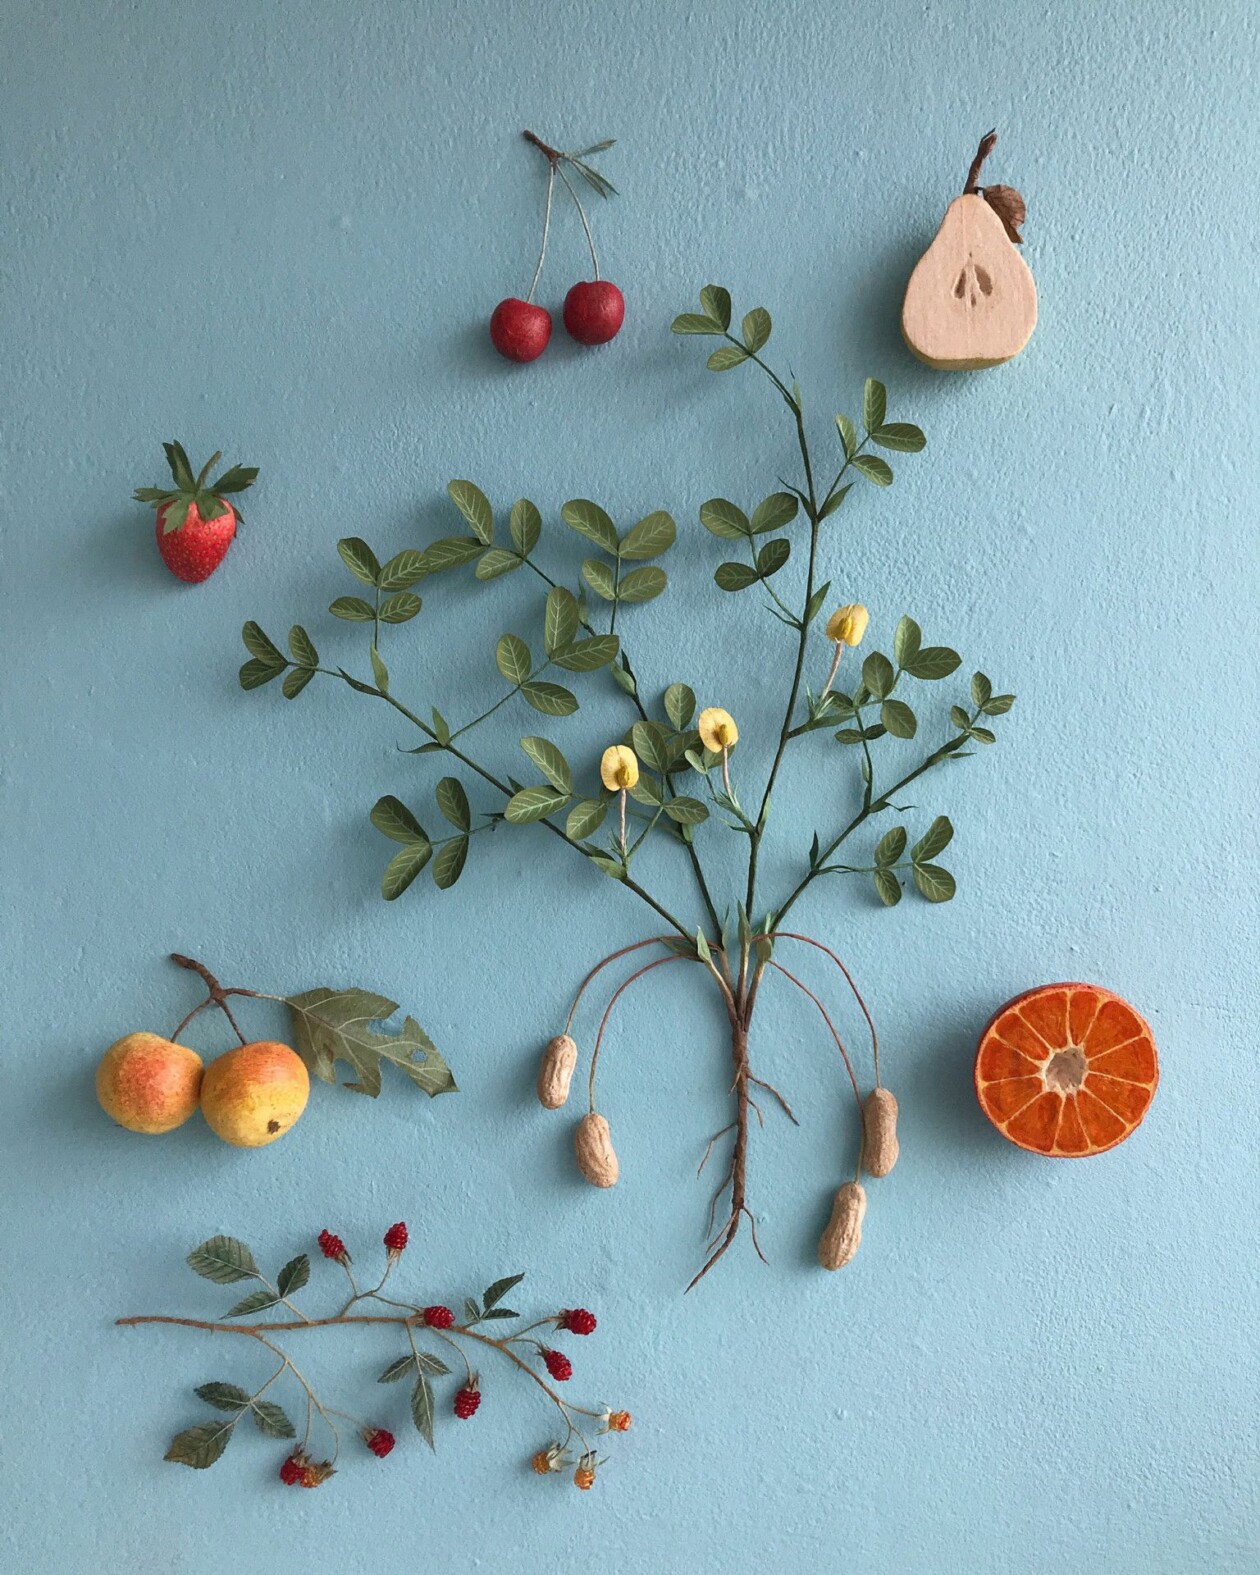 Splendid Lifelike Paper Sculptures Of Animals, Plants, Vegetables, And Mushrooms By ann Wood (22)